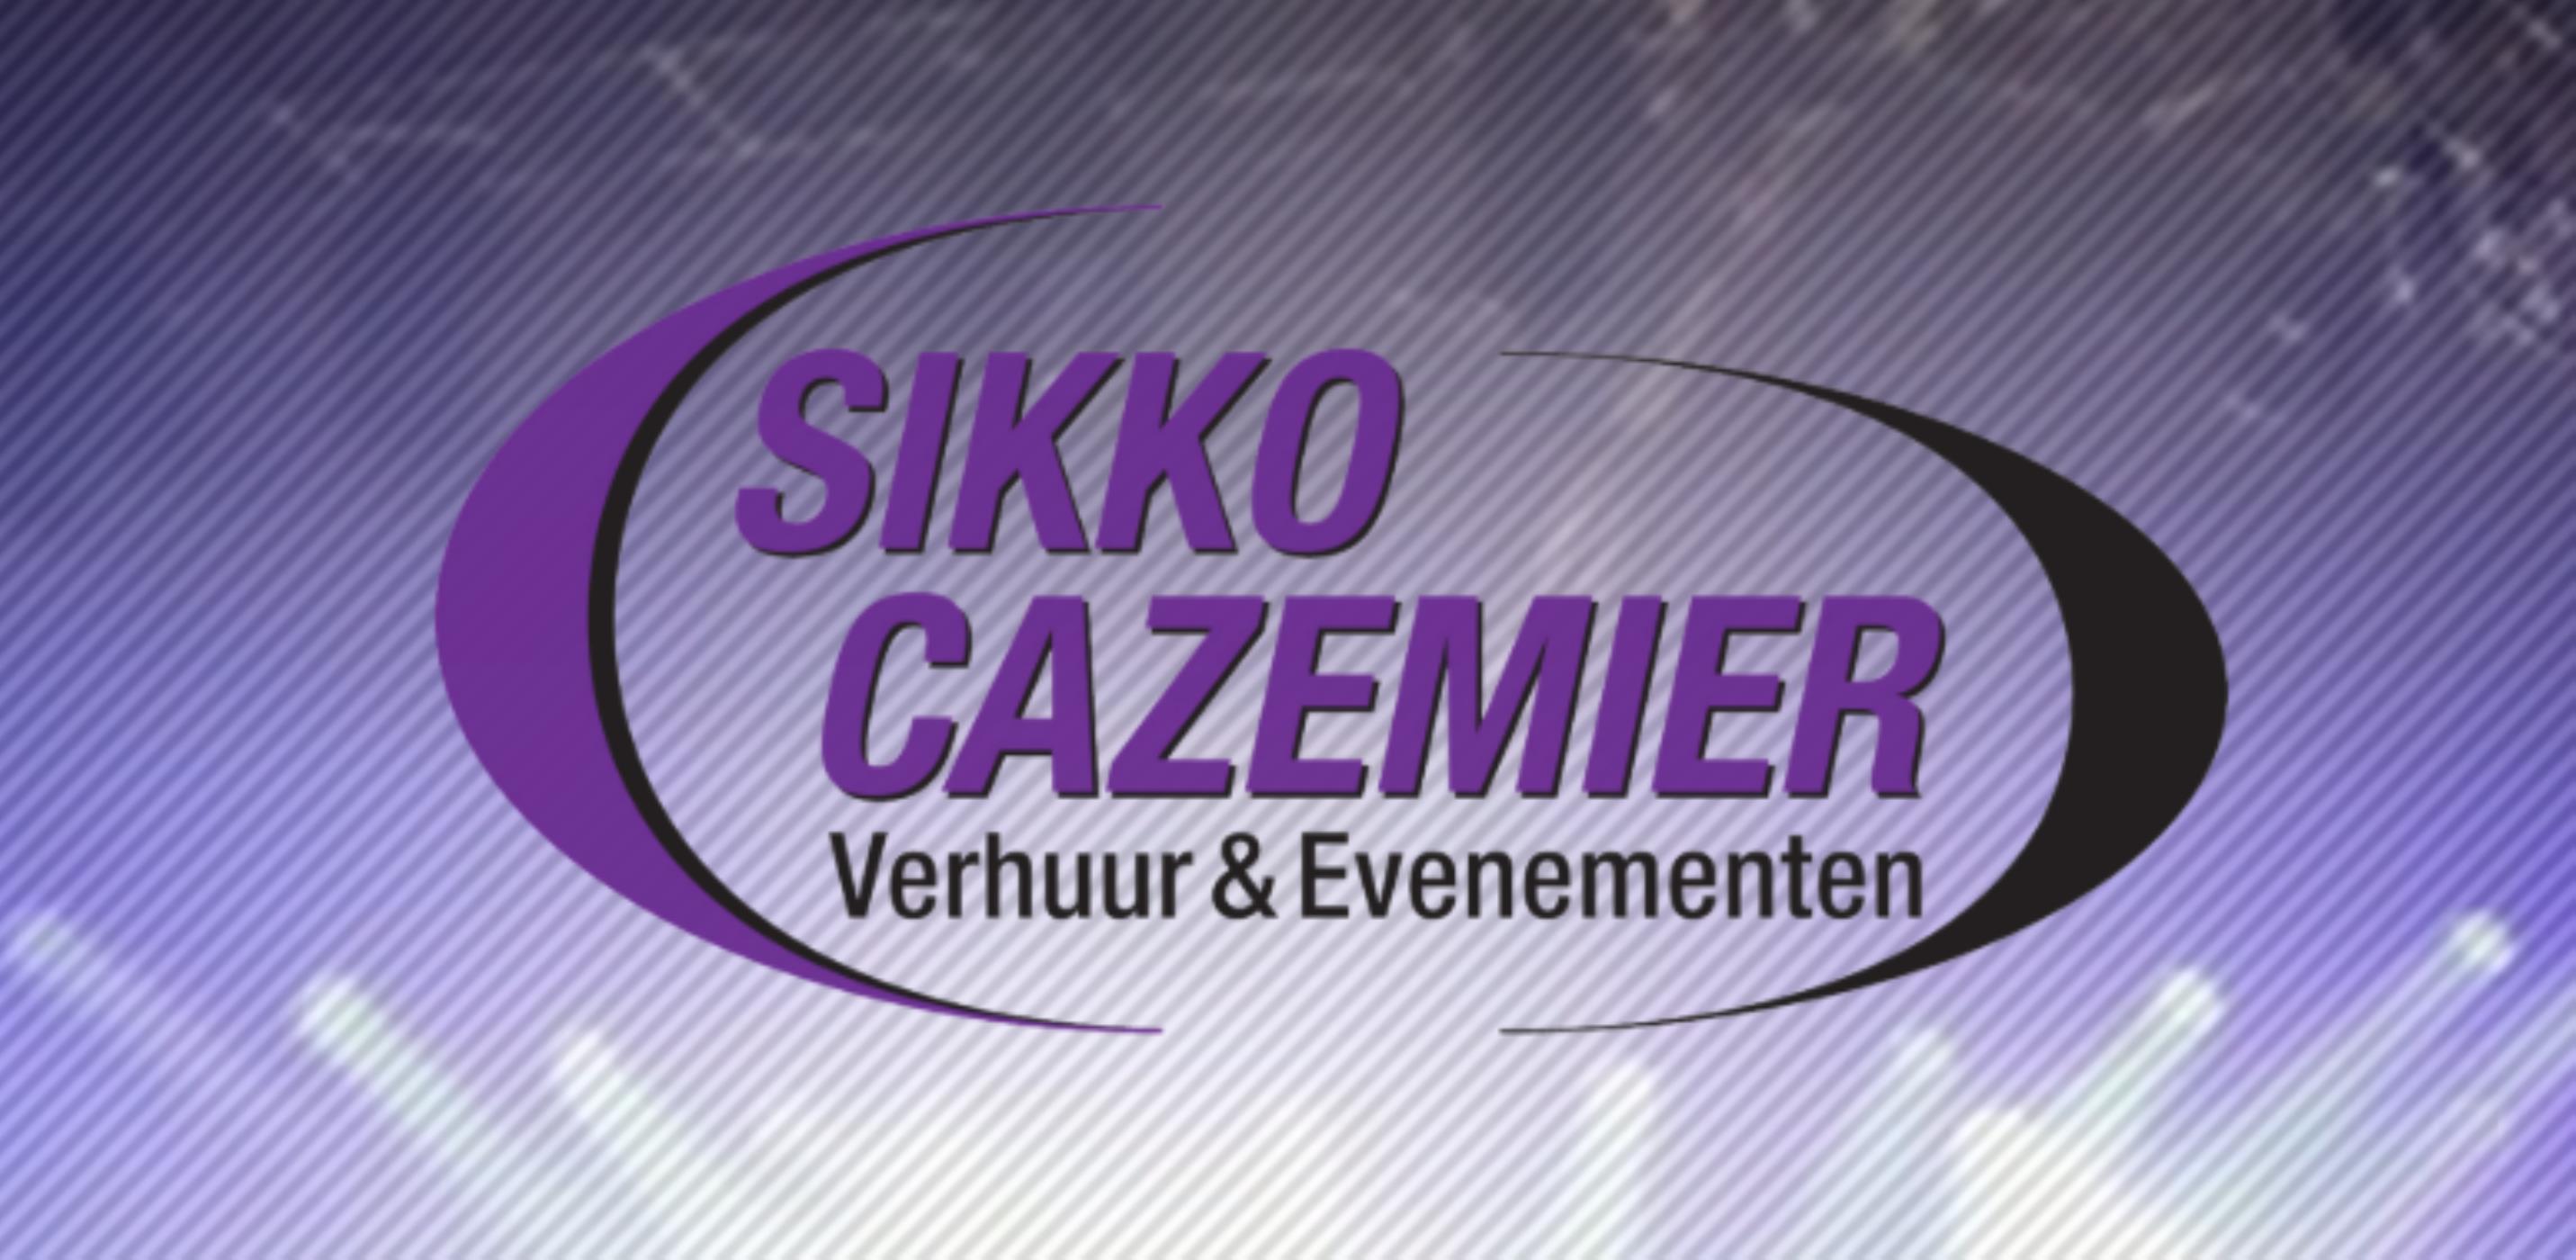 Logo Sikko Cazemier